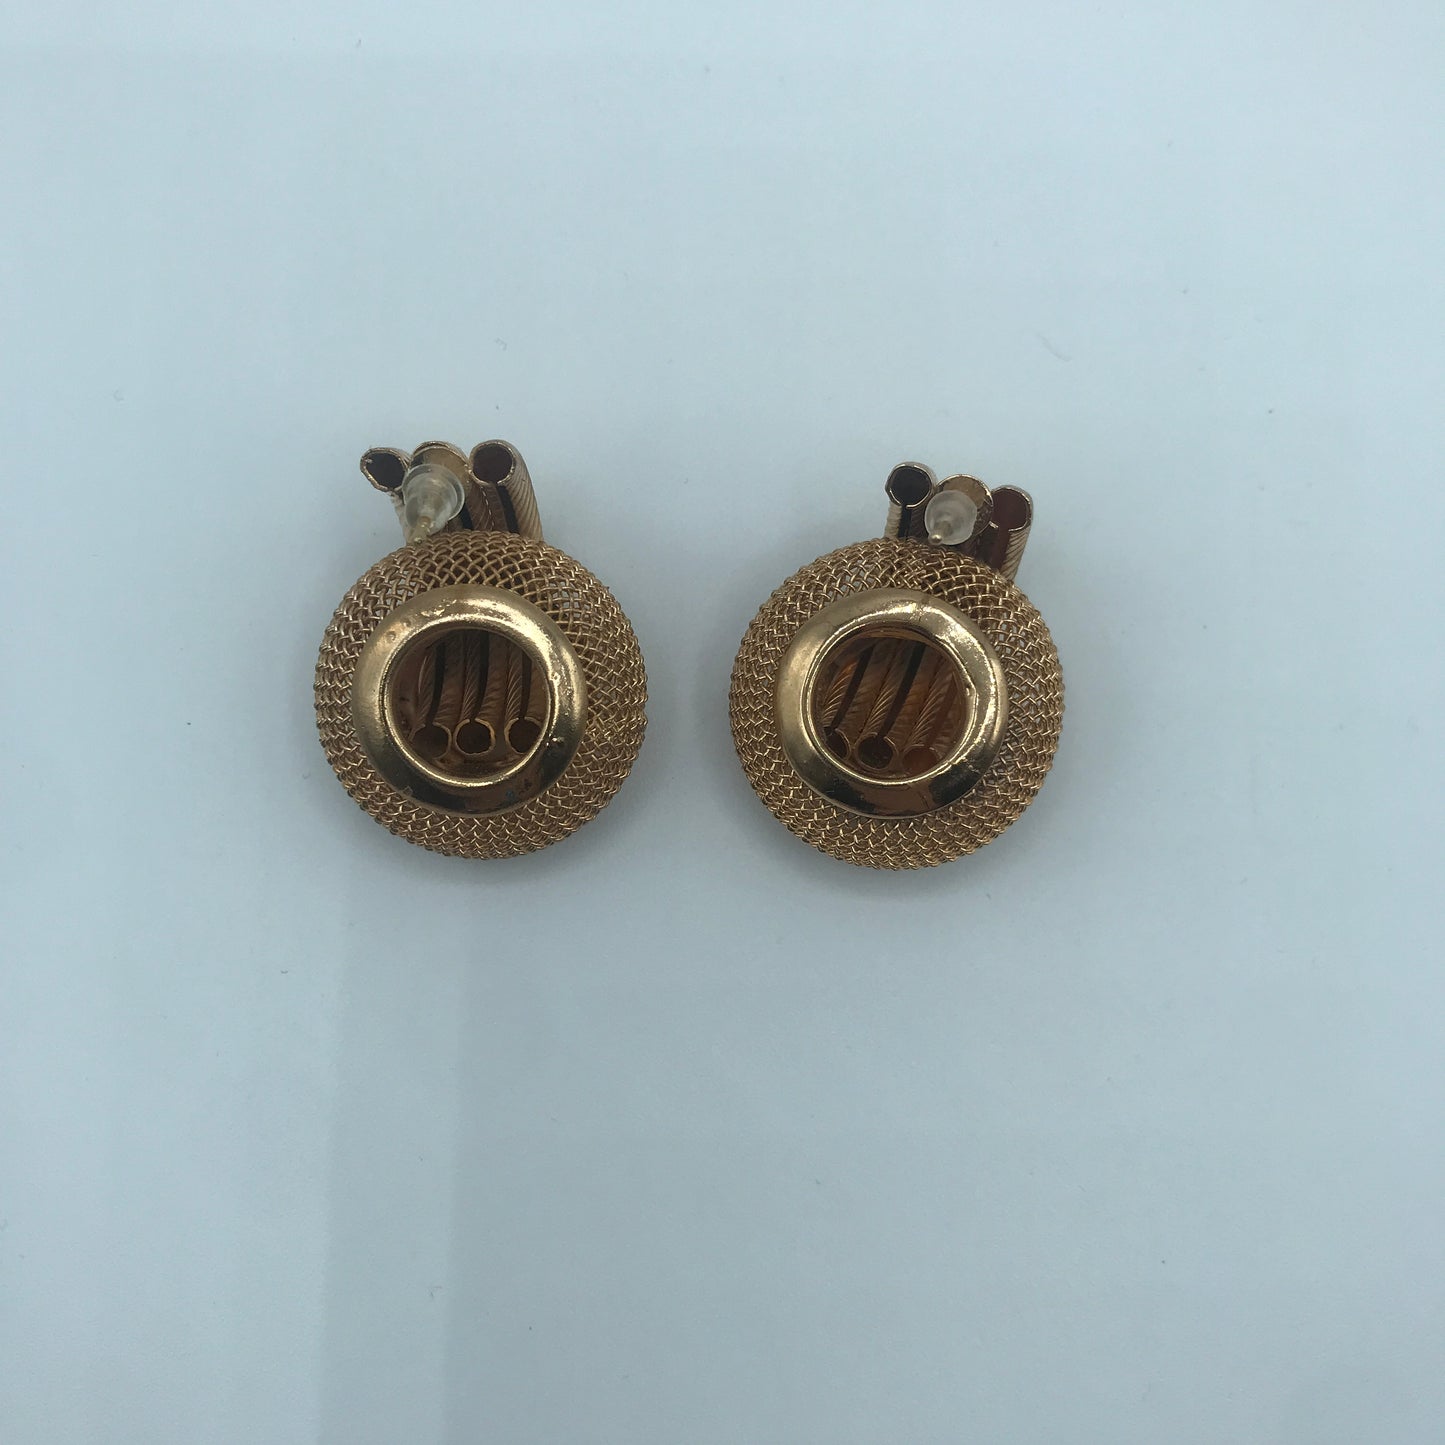 Linking honeycomb earrings